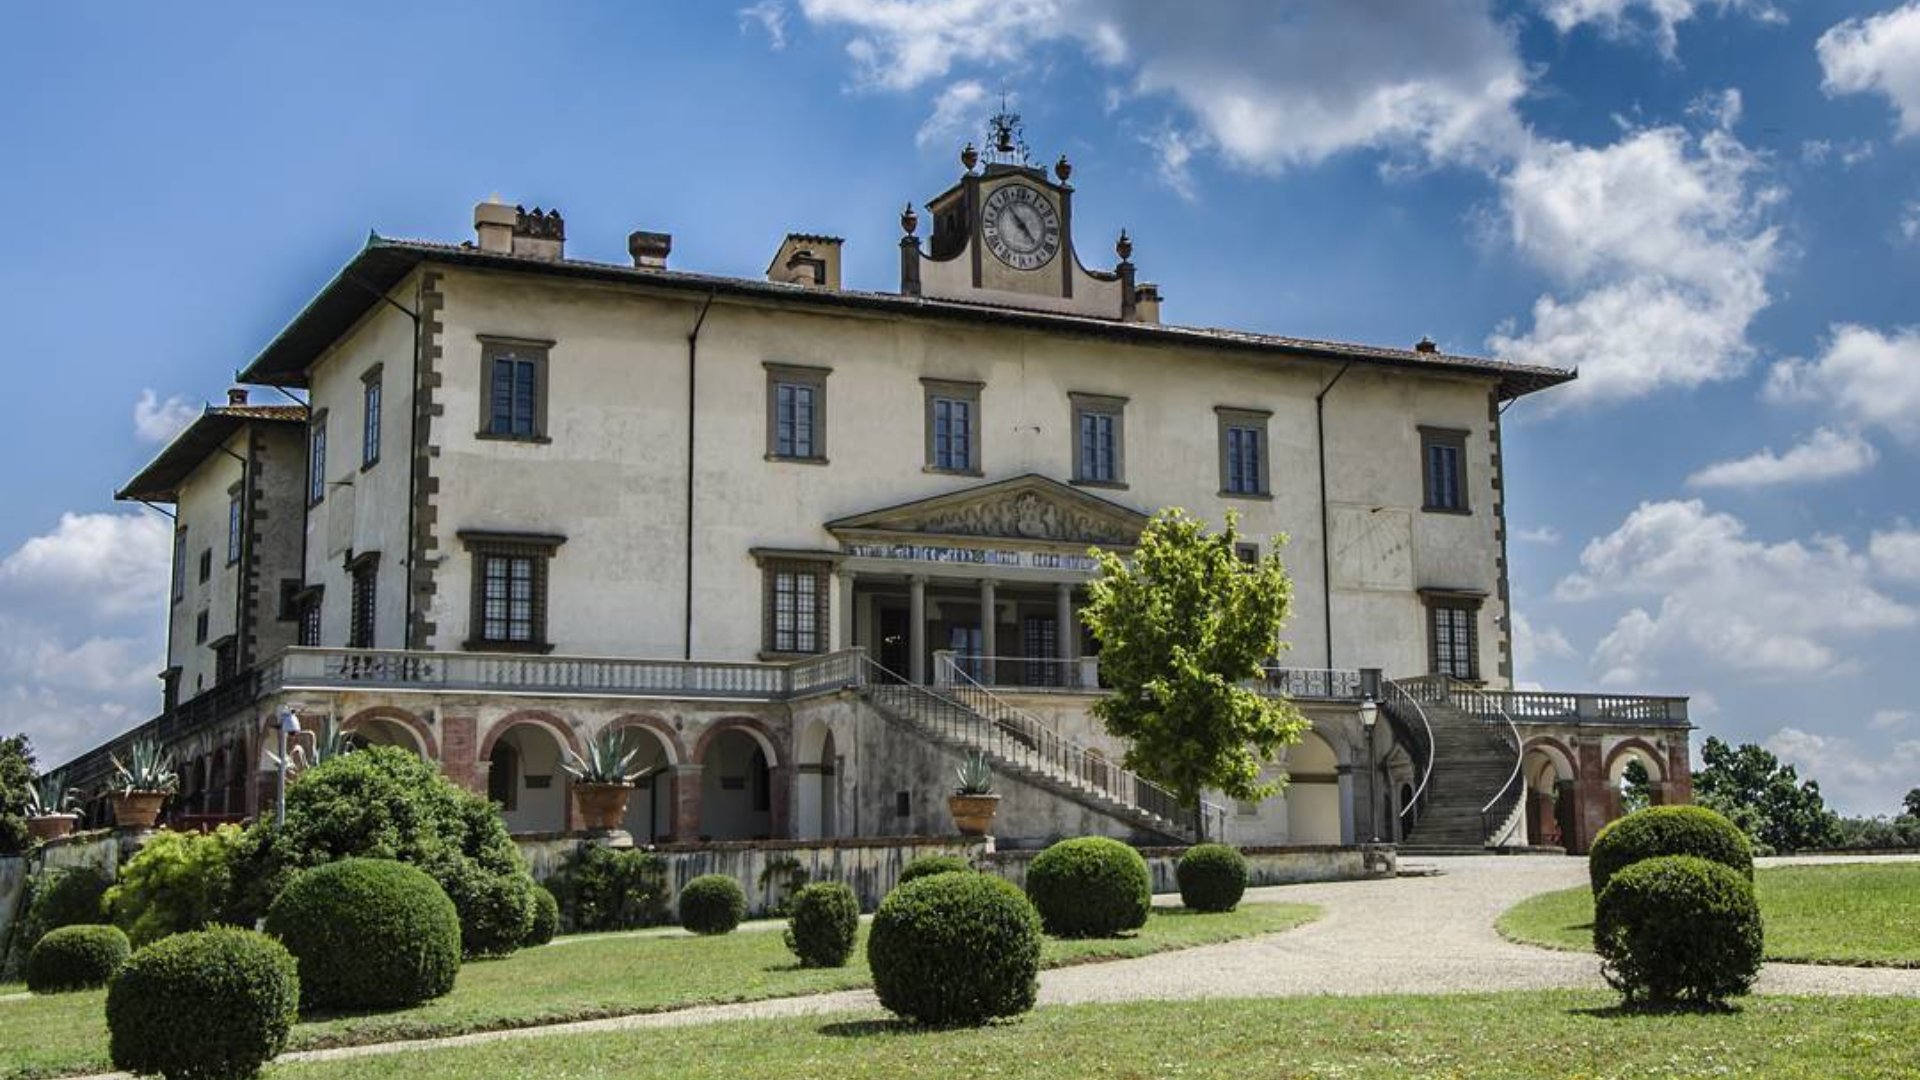 Die Medici-Villa von Poggio a Caiano